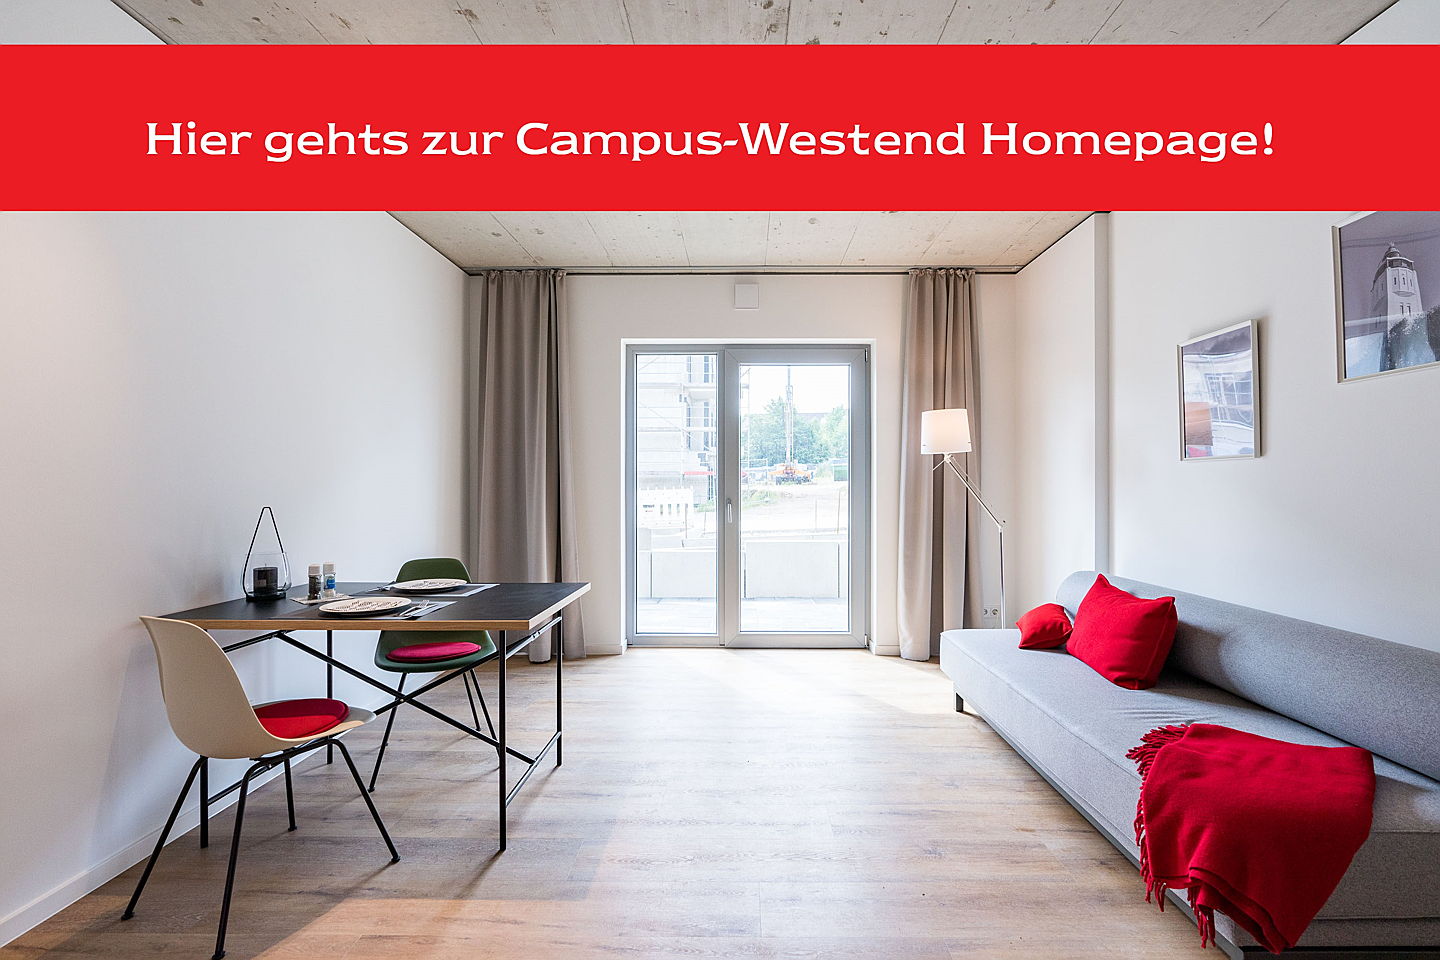  Bielefeld
- Campus homepage bild.jpg